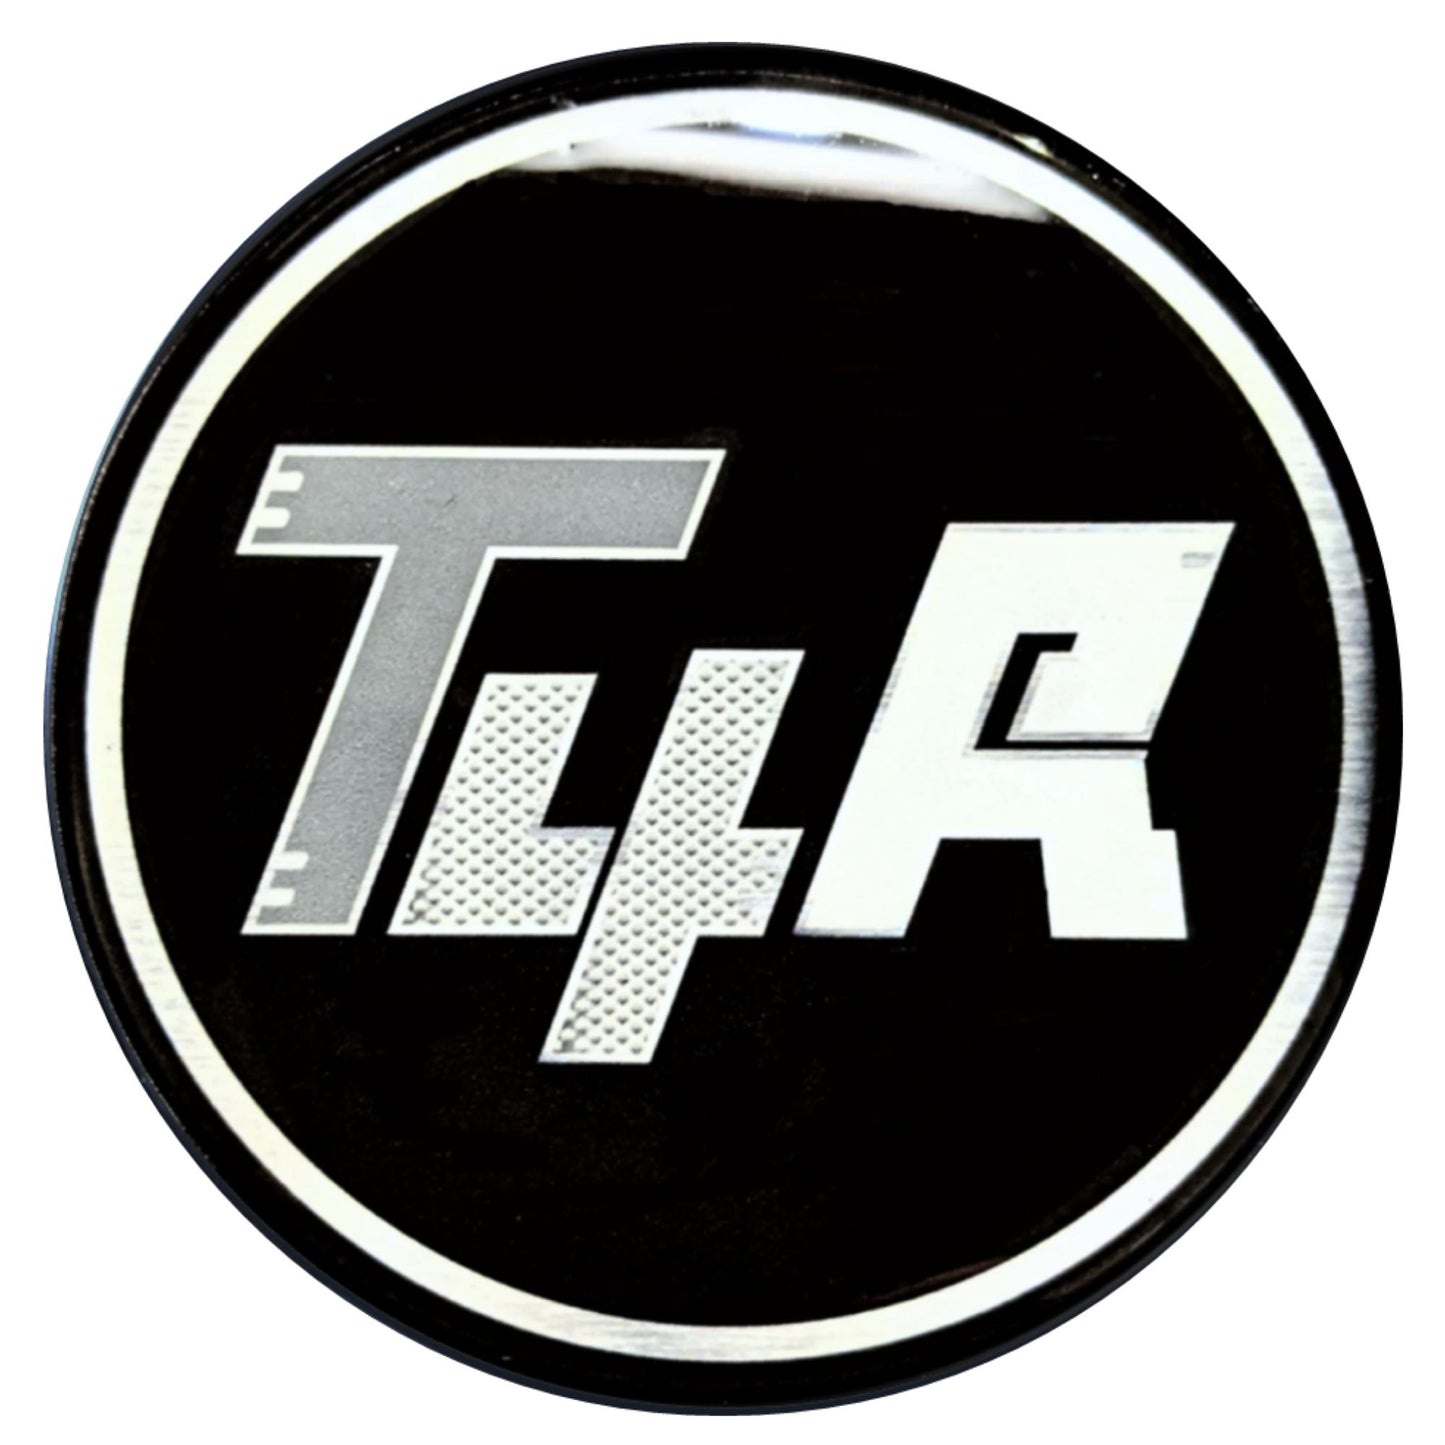 Grille Badge Emblem Fits Toyota 4Runner Lifestyle Blackout